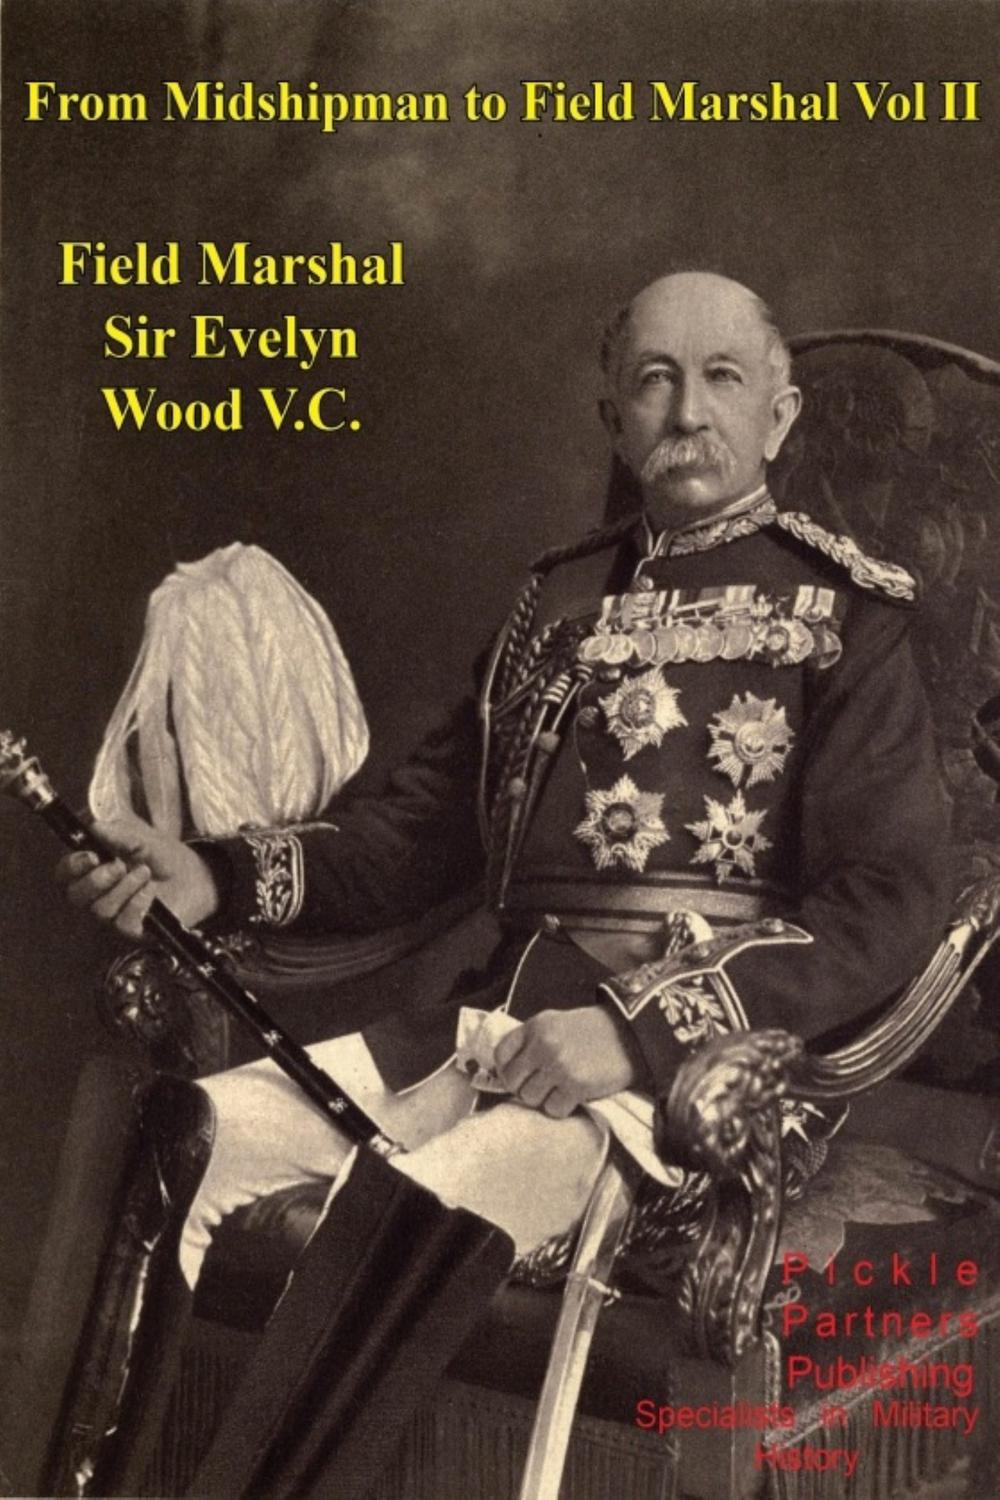 From Midshipman To Field Marshal – Vol. II - Field Marshal Sir Evelyn Wood V.C. G.C.B., G.C.M.G.